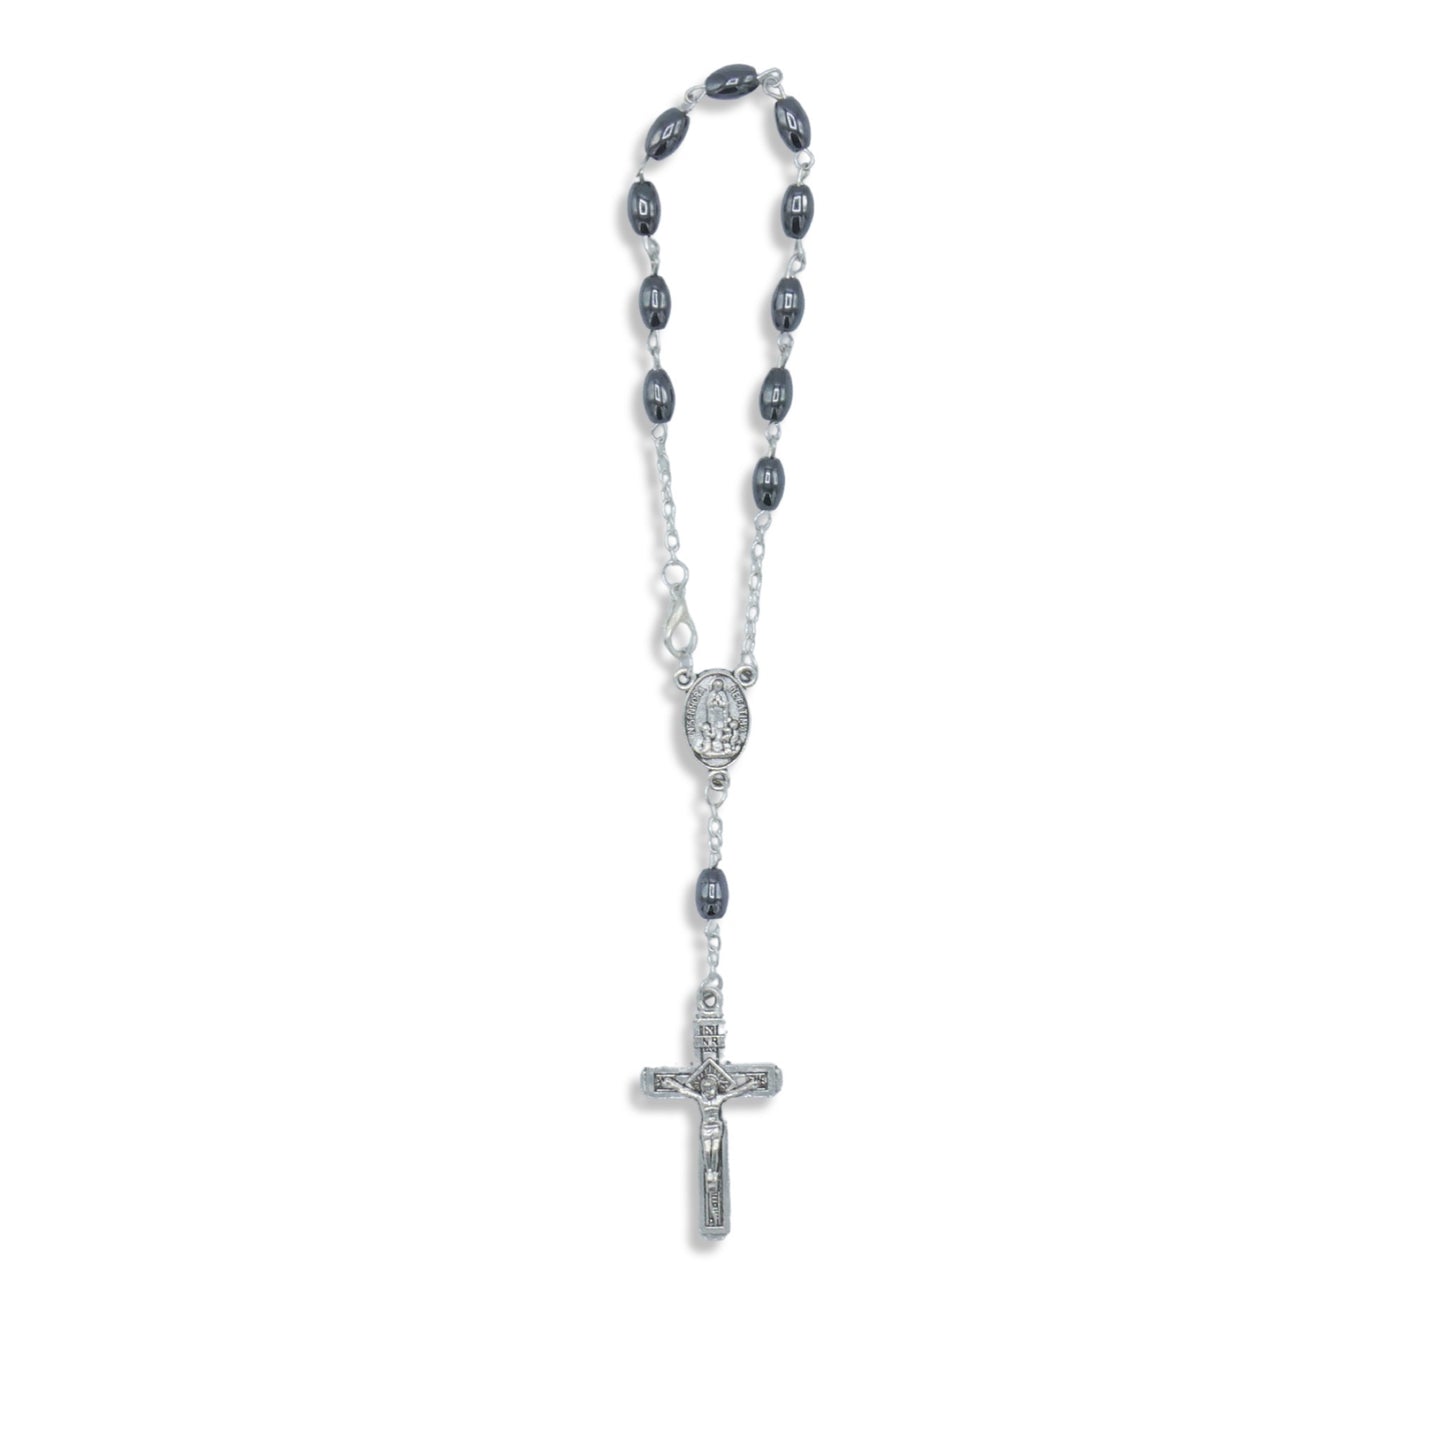 Metallic Fatima Decade Rosary with Soil